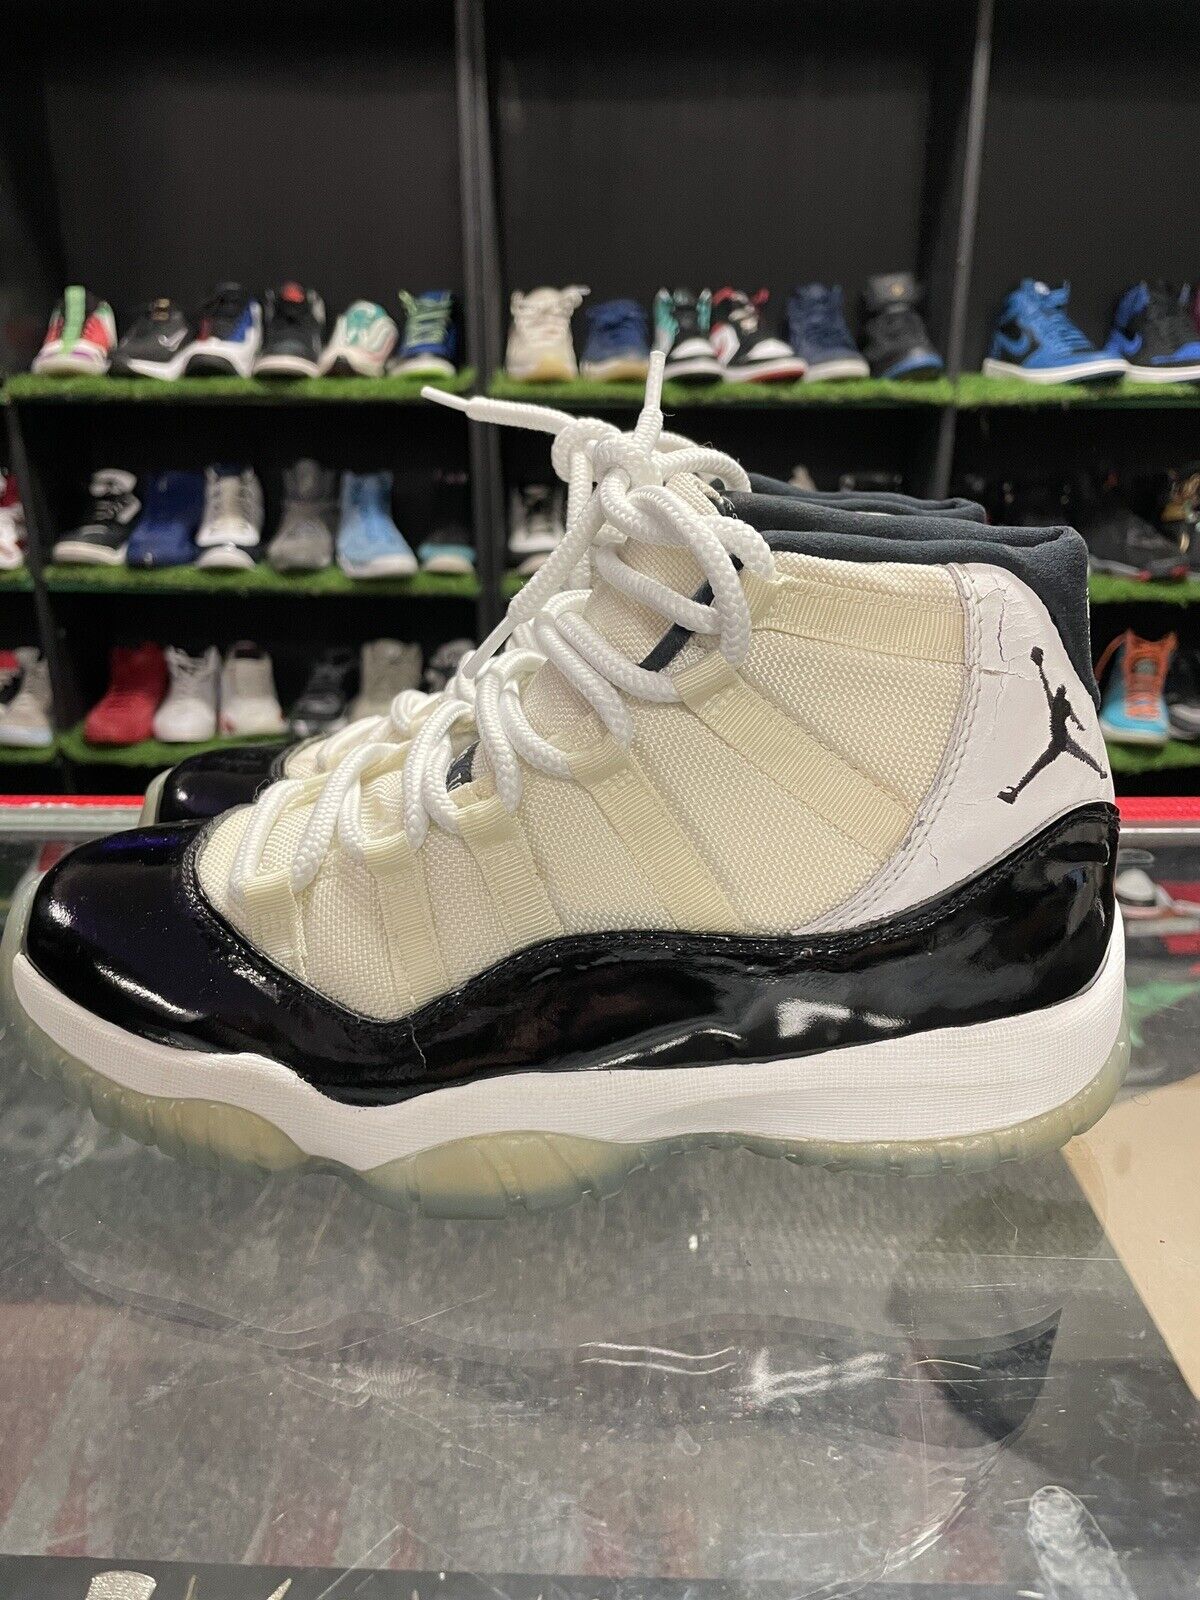 Size 9 - Jordan 11 OG Concord 1995 130245-101 Rare Space Jam Shoes